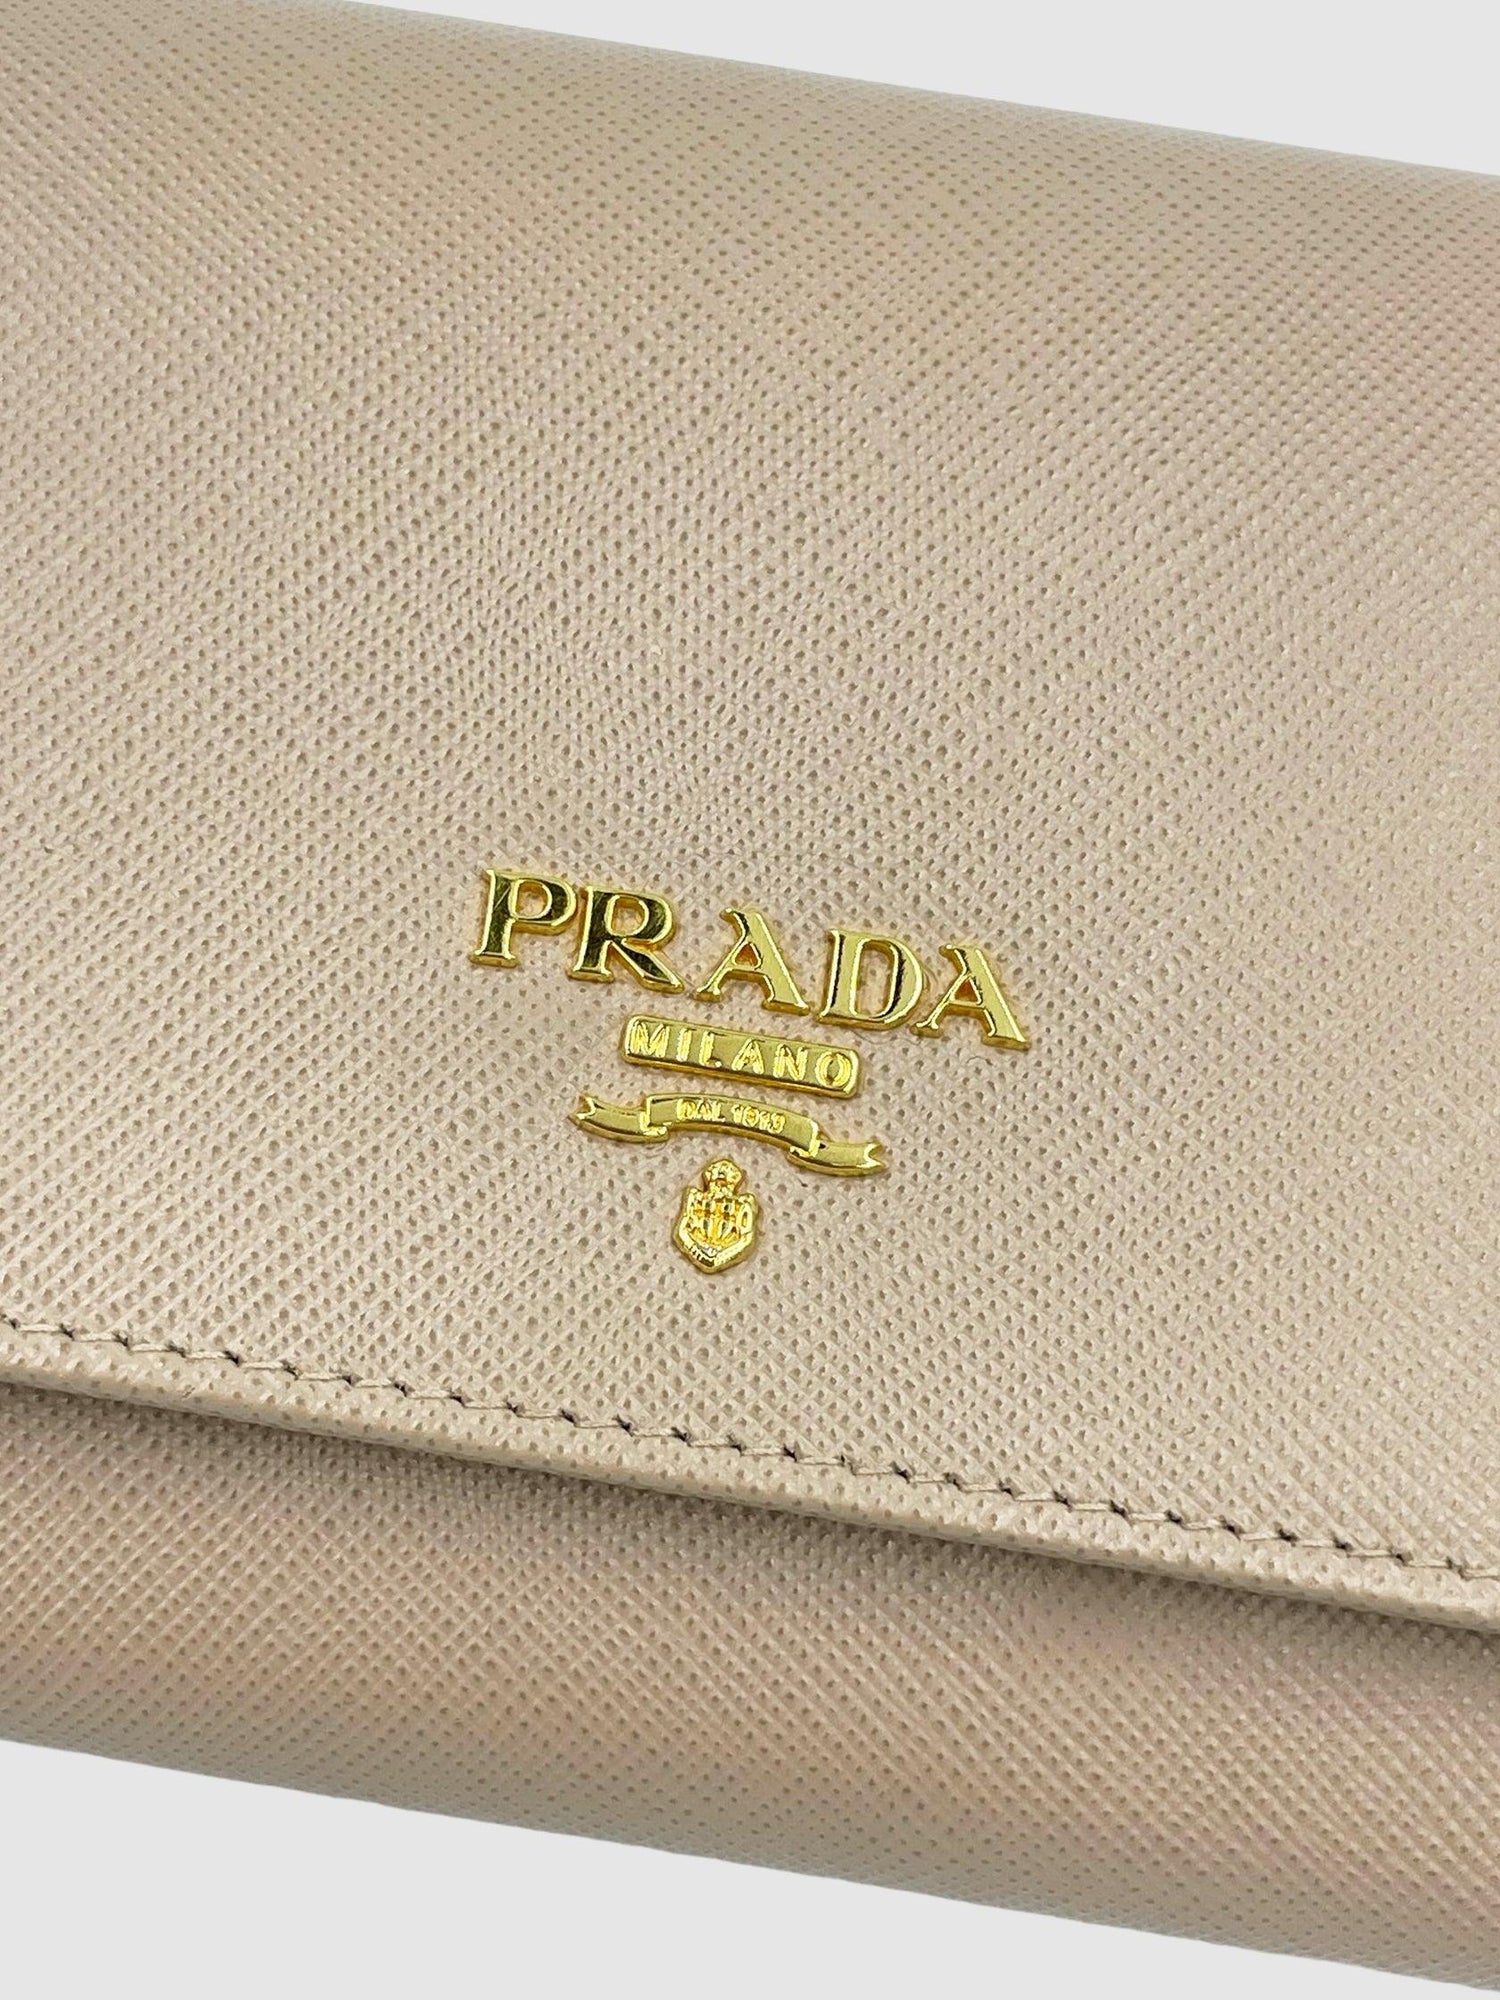 Prada - Second Nature Boutique